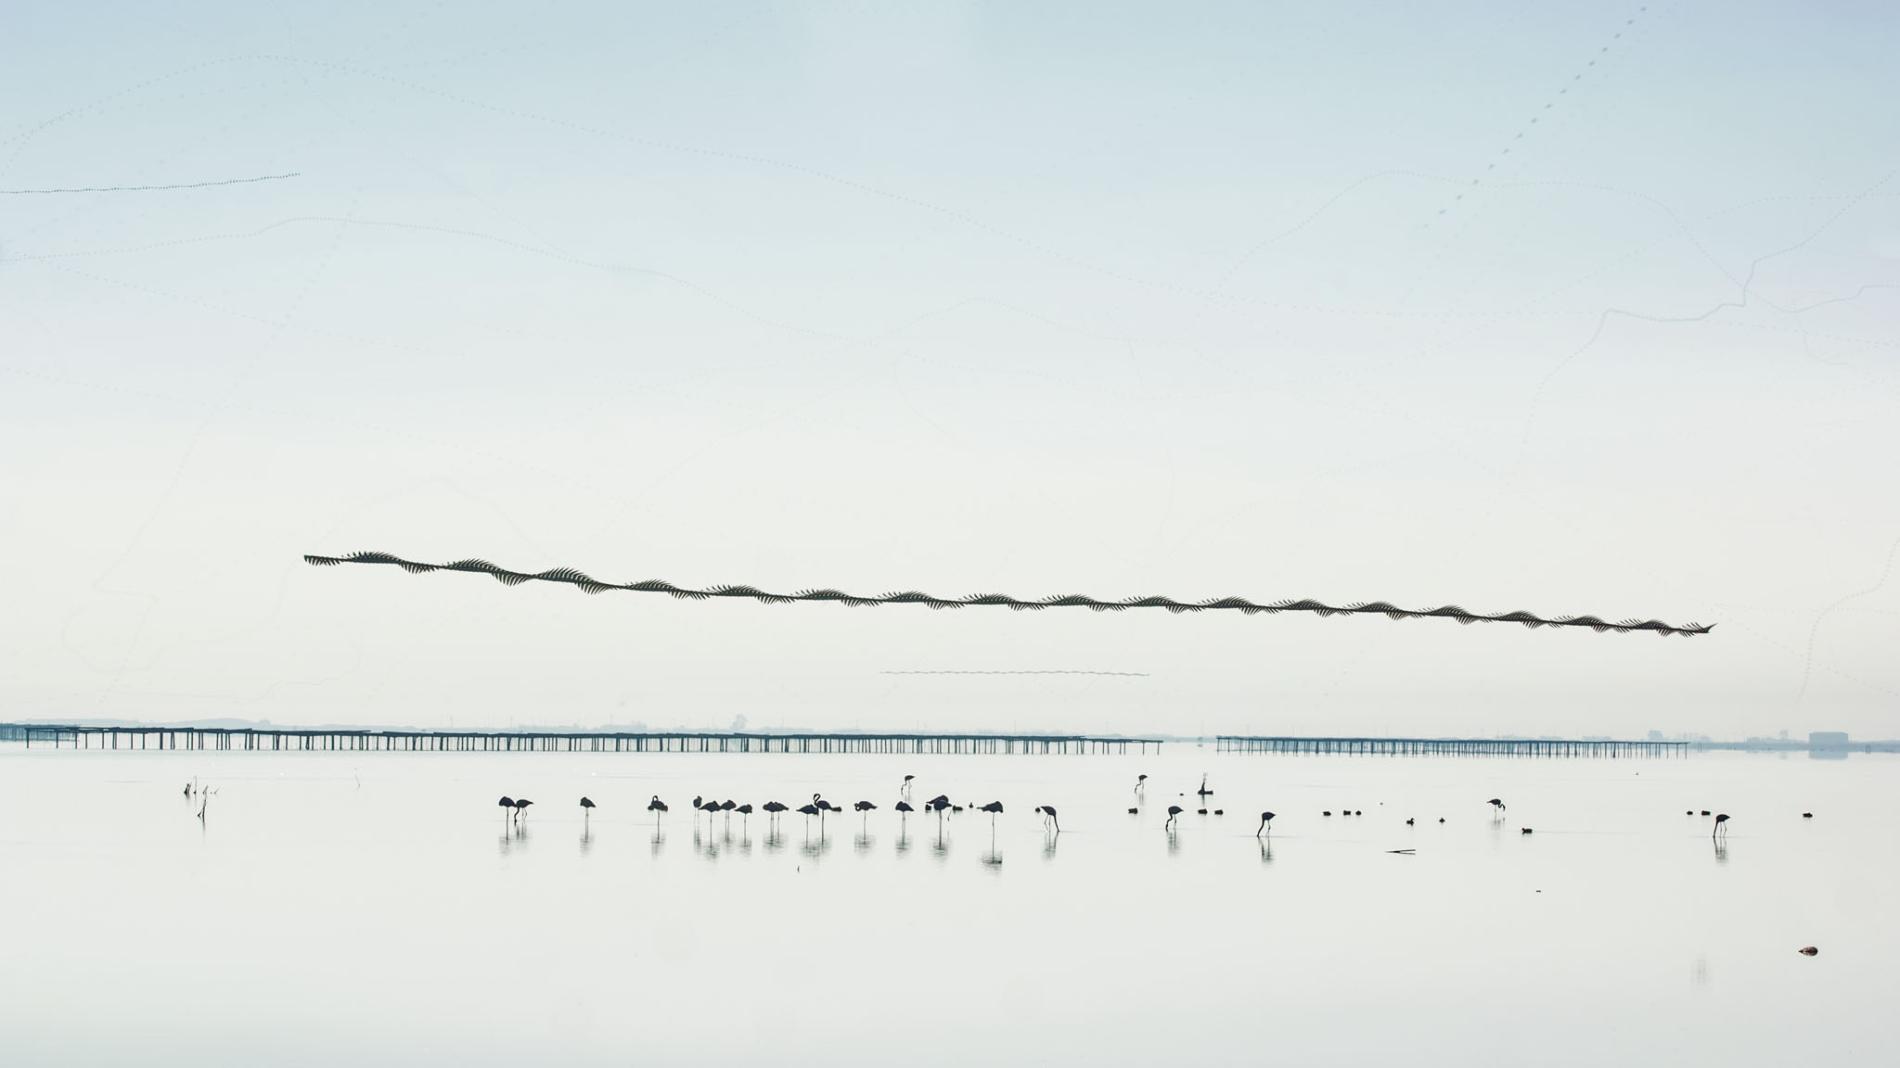 Xavi Bou captures the paths that birds make across the sky